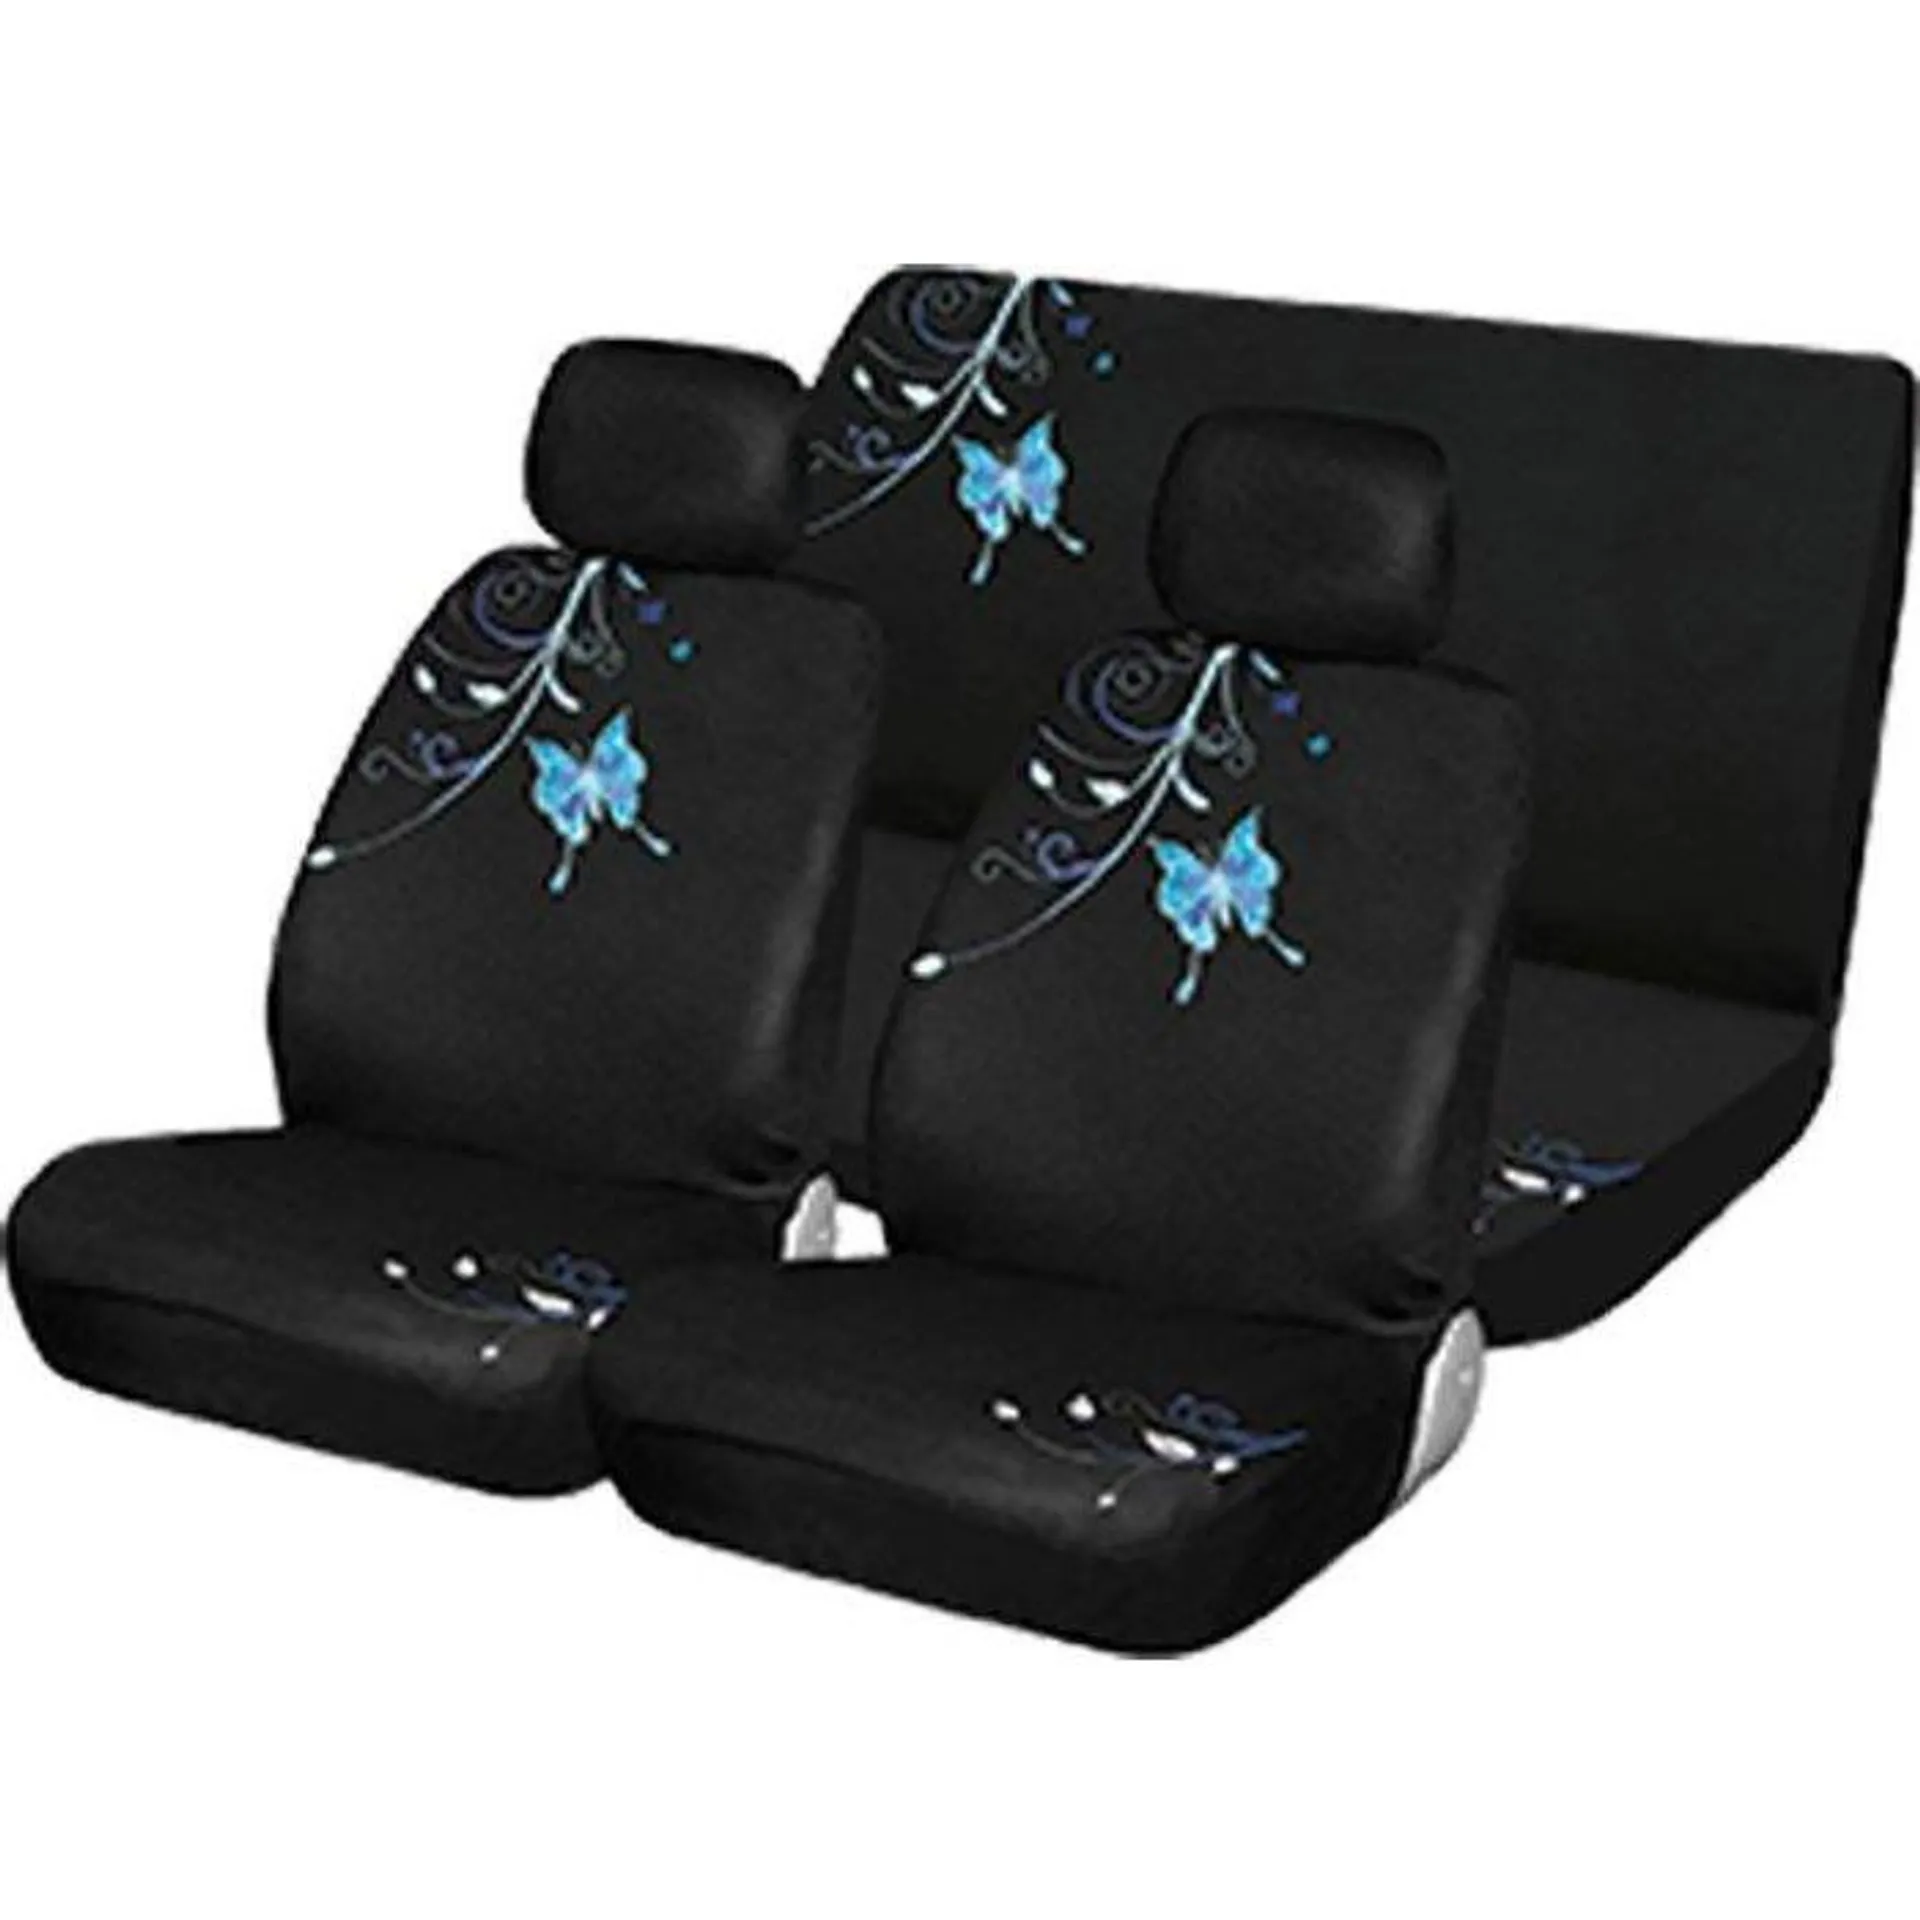 Autogear 6 Piece Butterfly Seat Cover Front & Rear Set Black Blue Butterfly